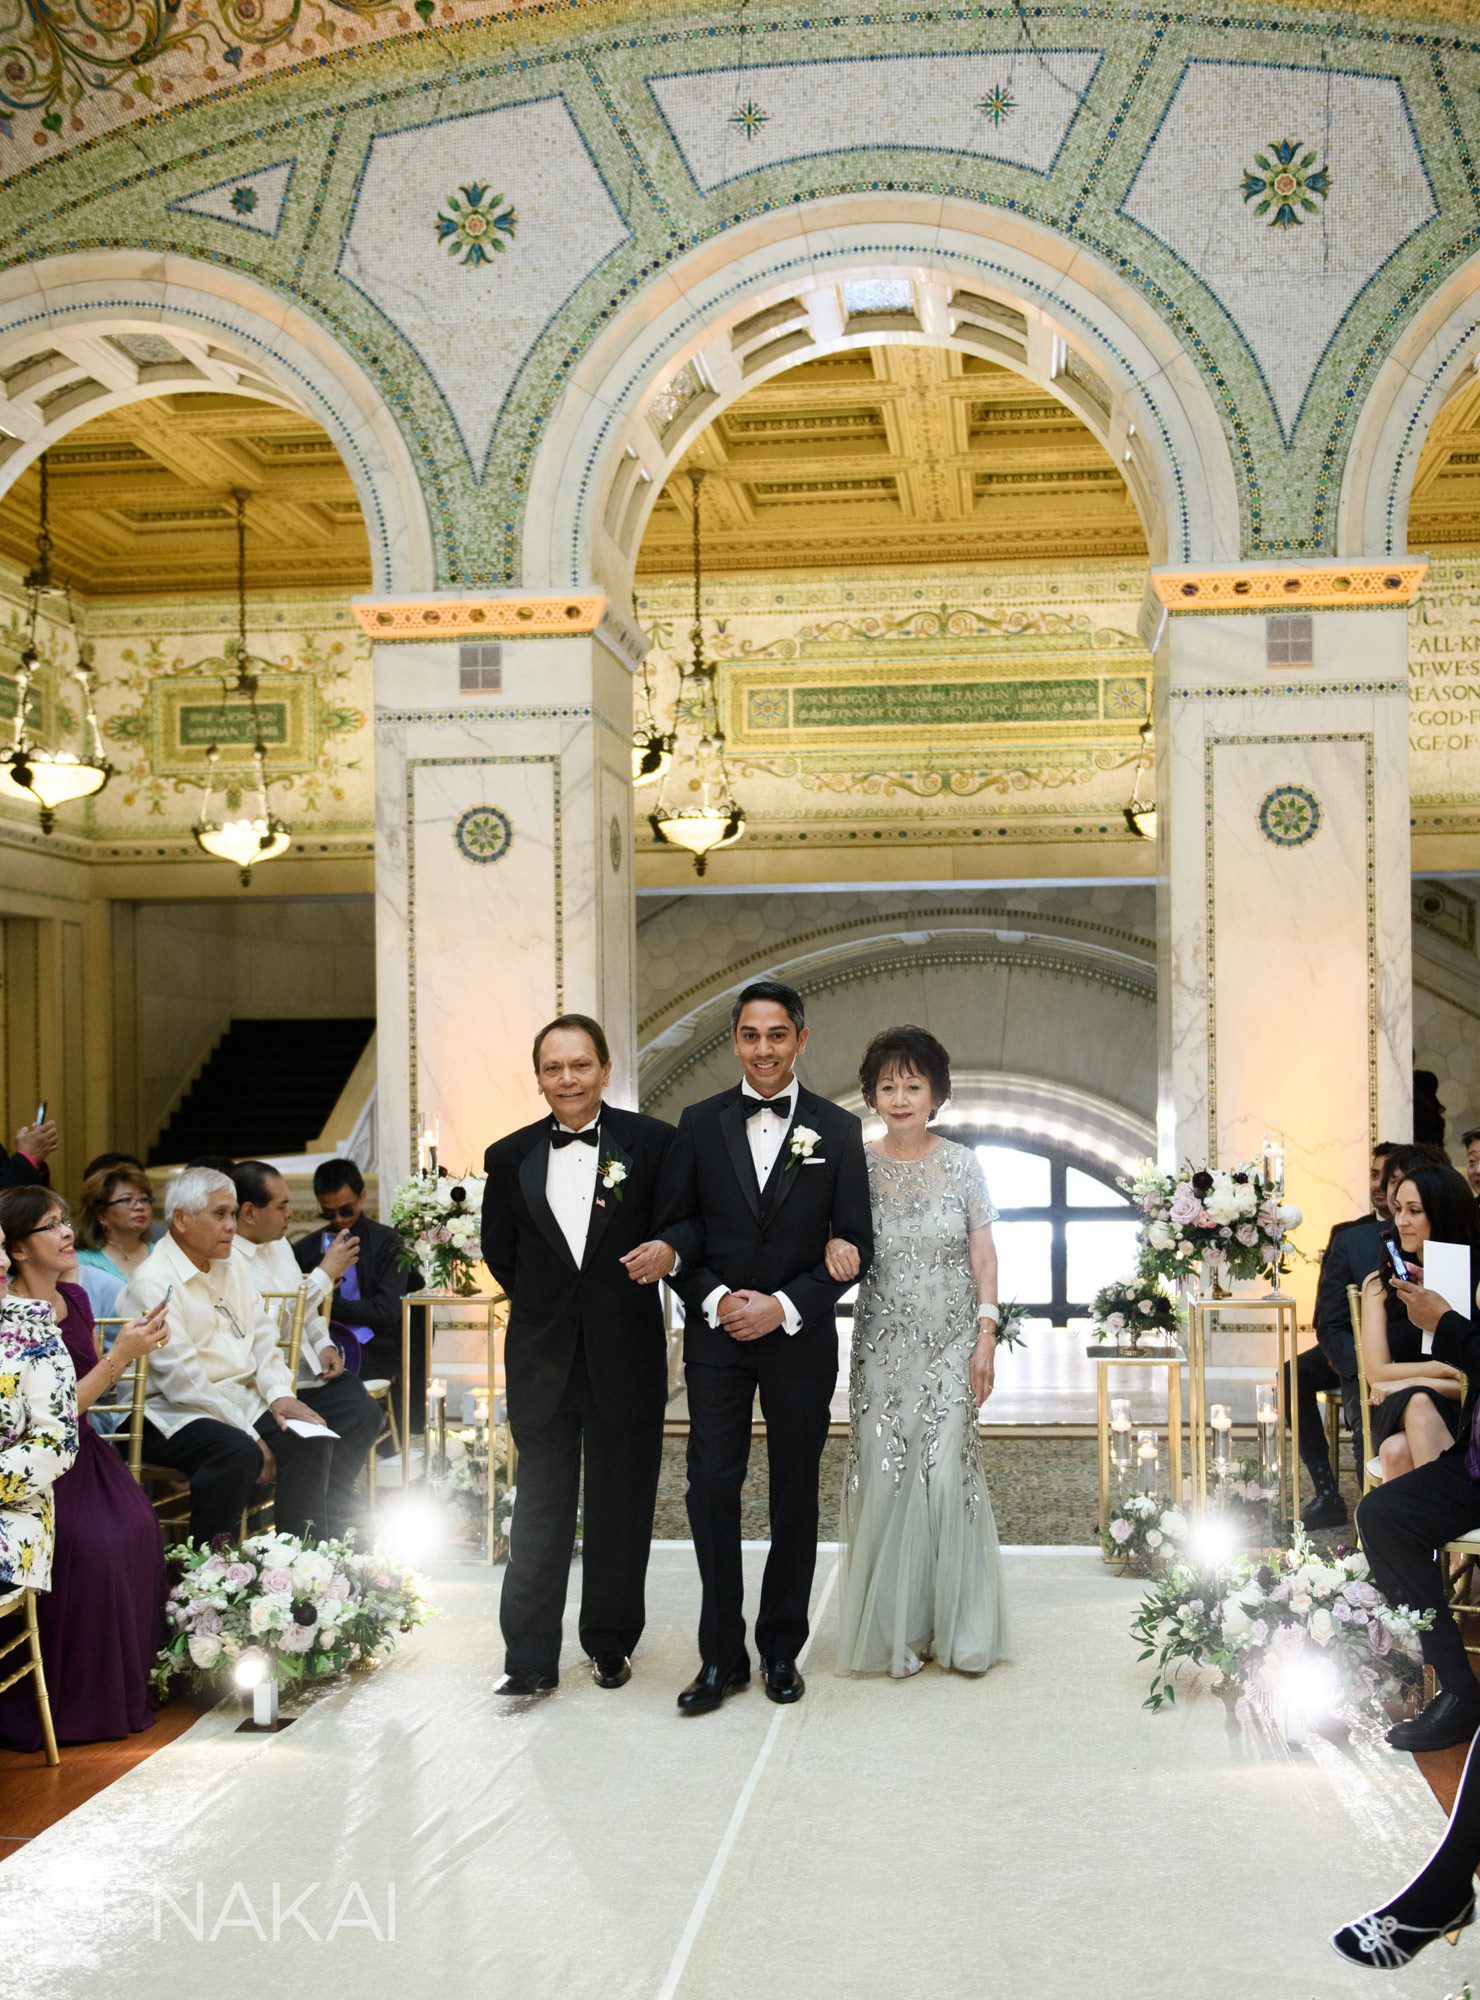 Chicago cultural wedding ceremony photographer groom